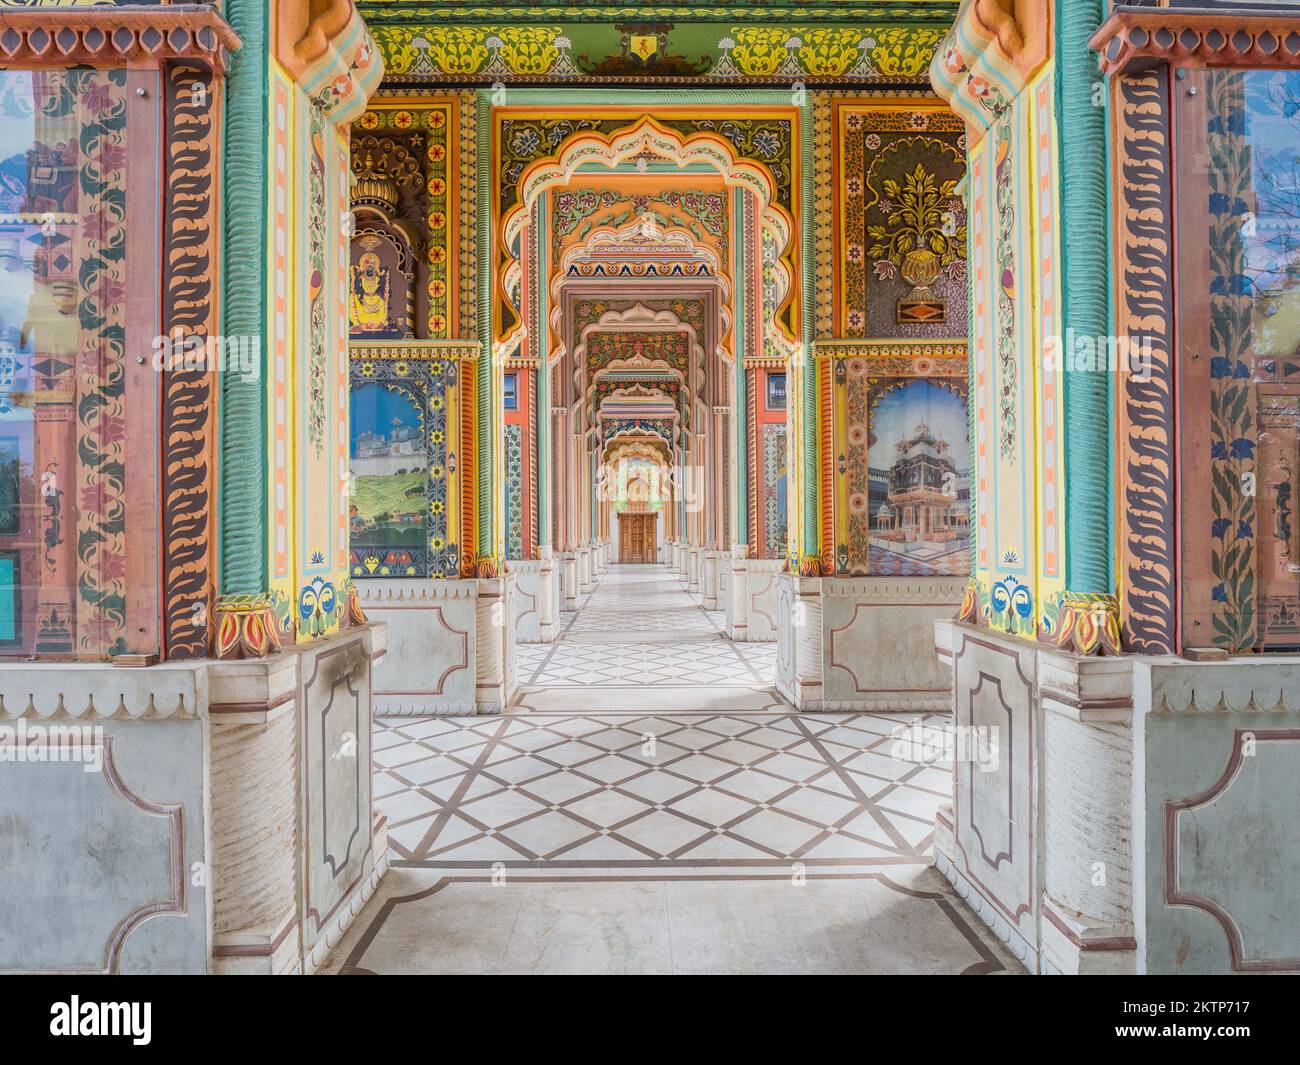 Patrika Gate en Jaipur, Rajasthan, India. Foto de stock